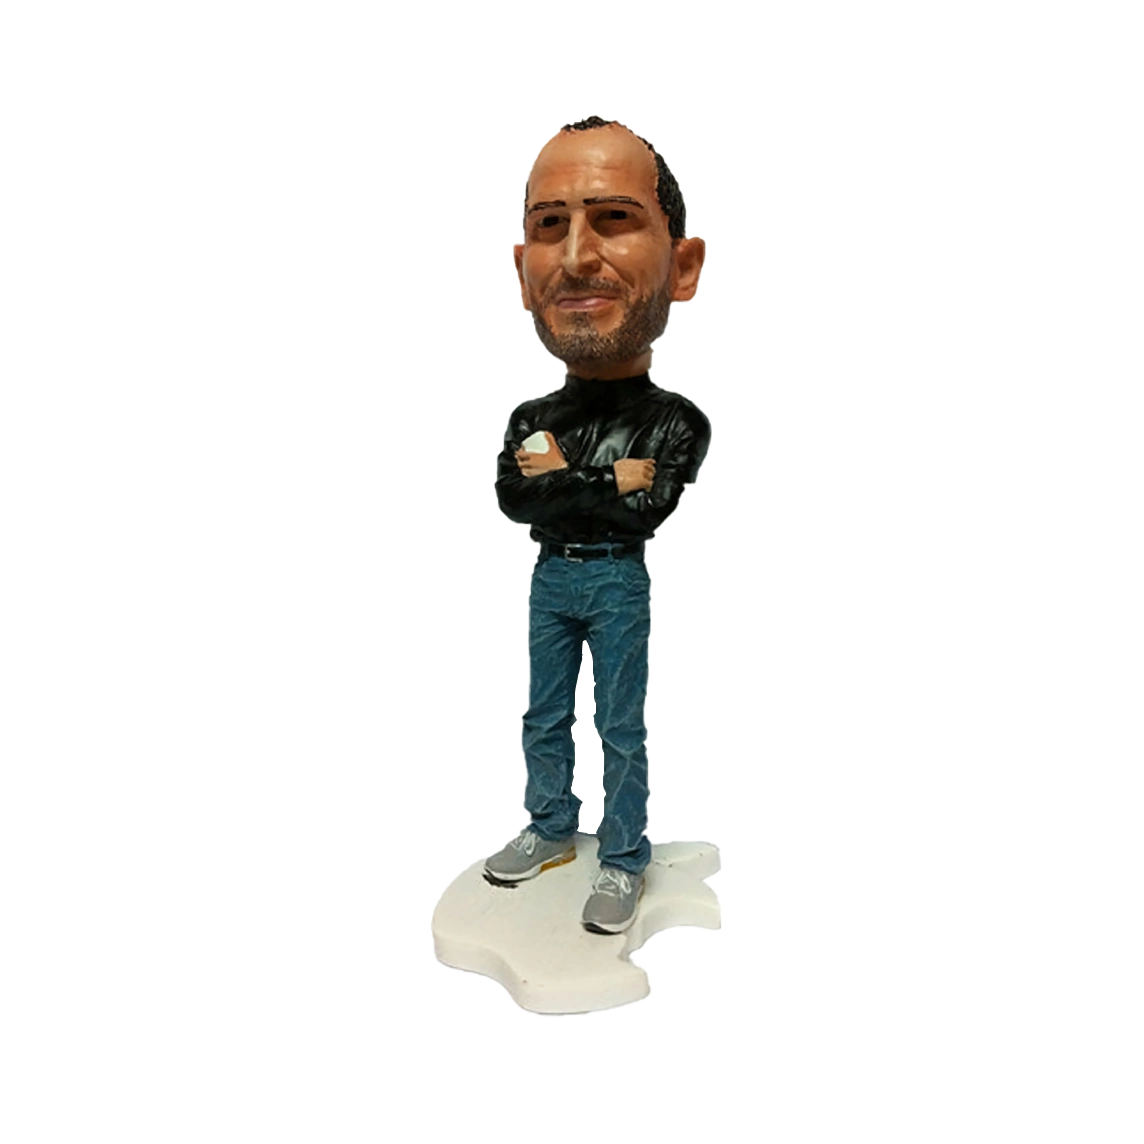 Steve Jobs Statue Figure Doll